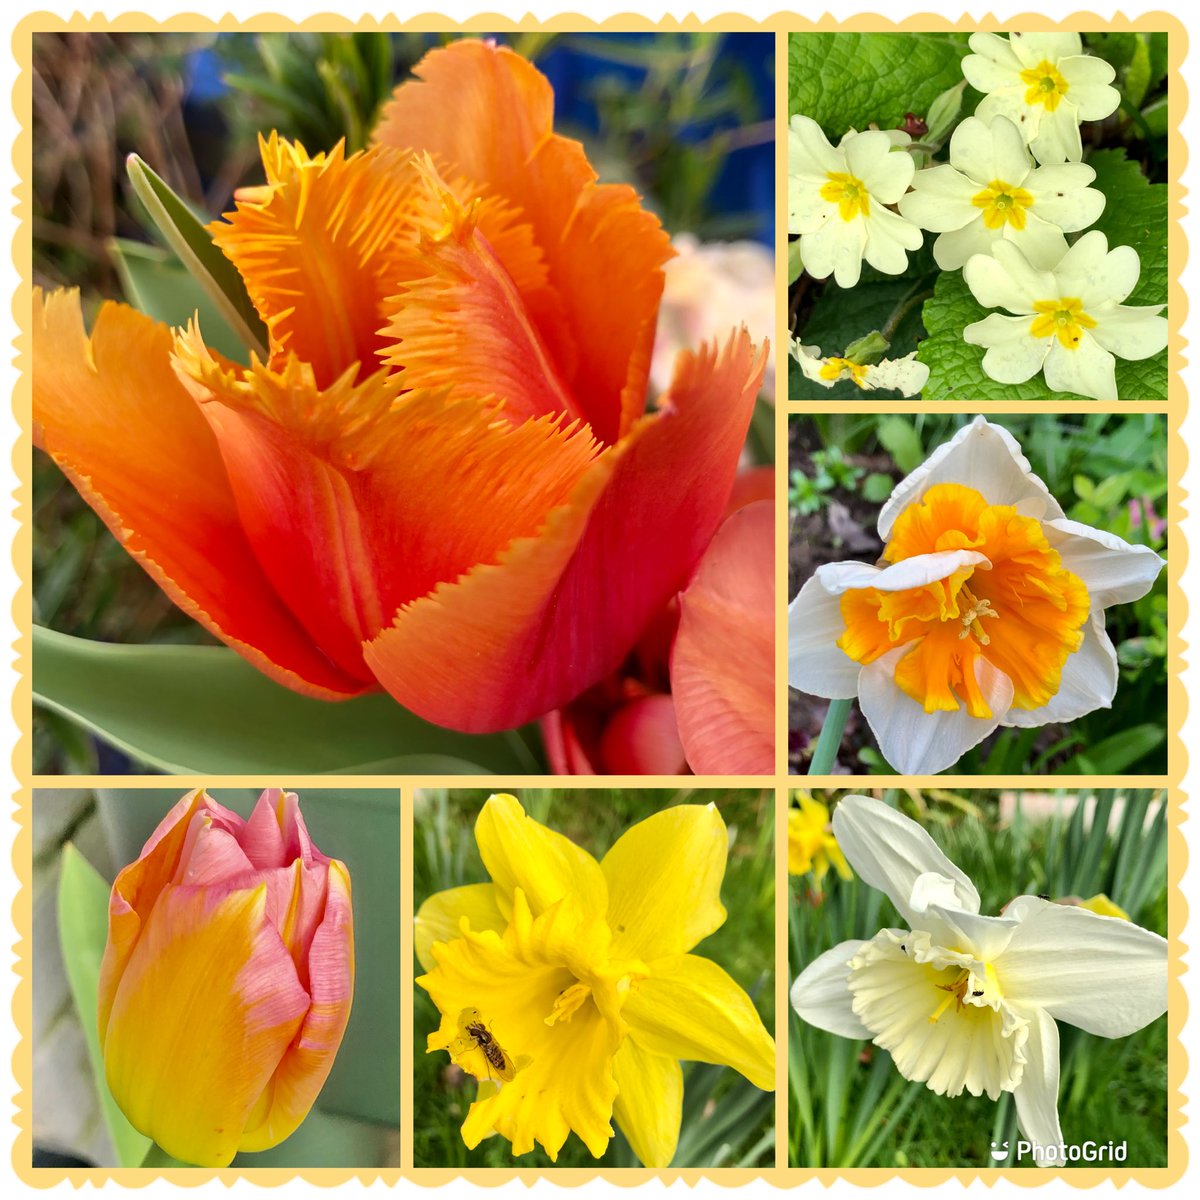 The Joy of Spring colour 🐣🧡💛#Spring #Colourful #Gardening #Flowers #TulipTuesday #MyGarden